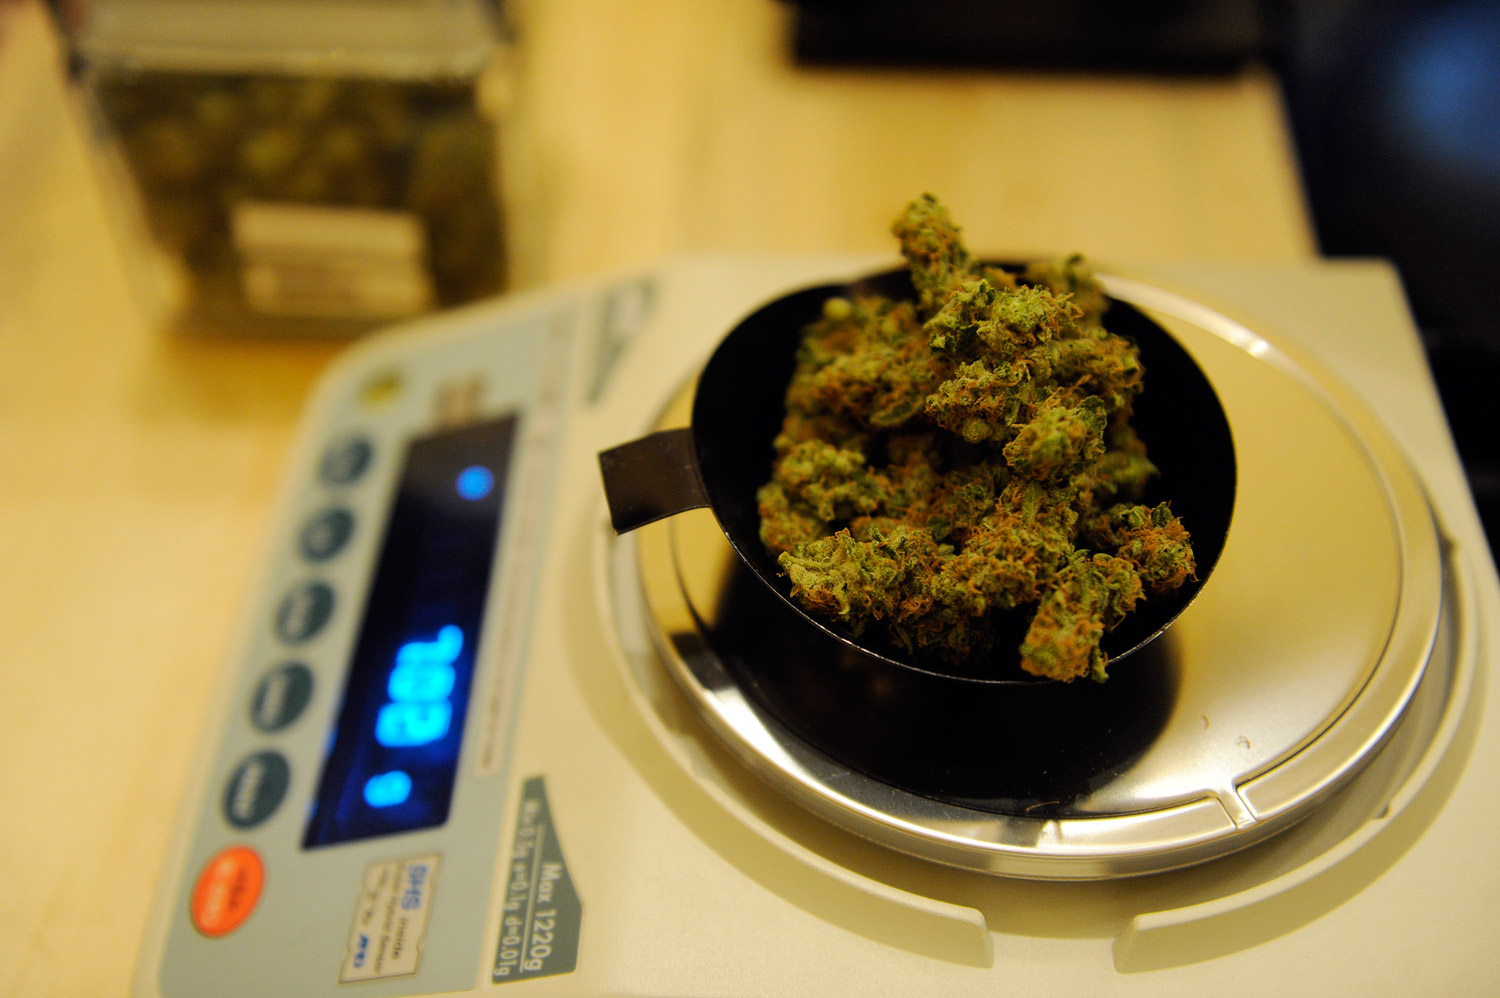 Marijuana weighed on scale